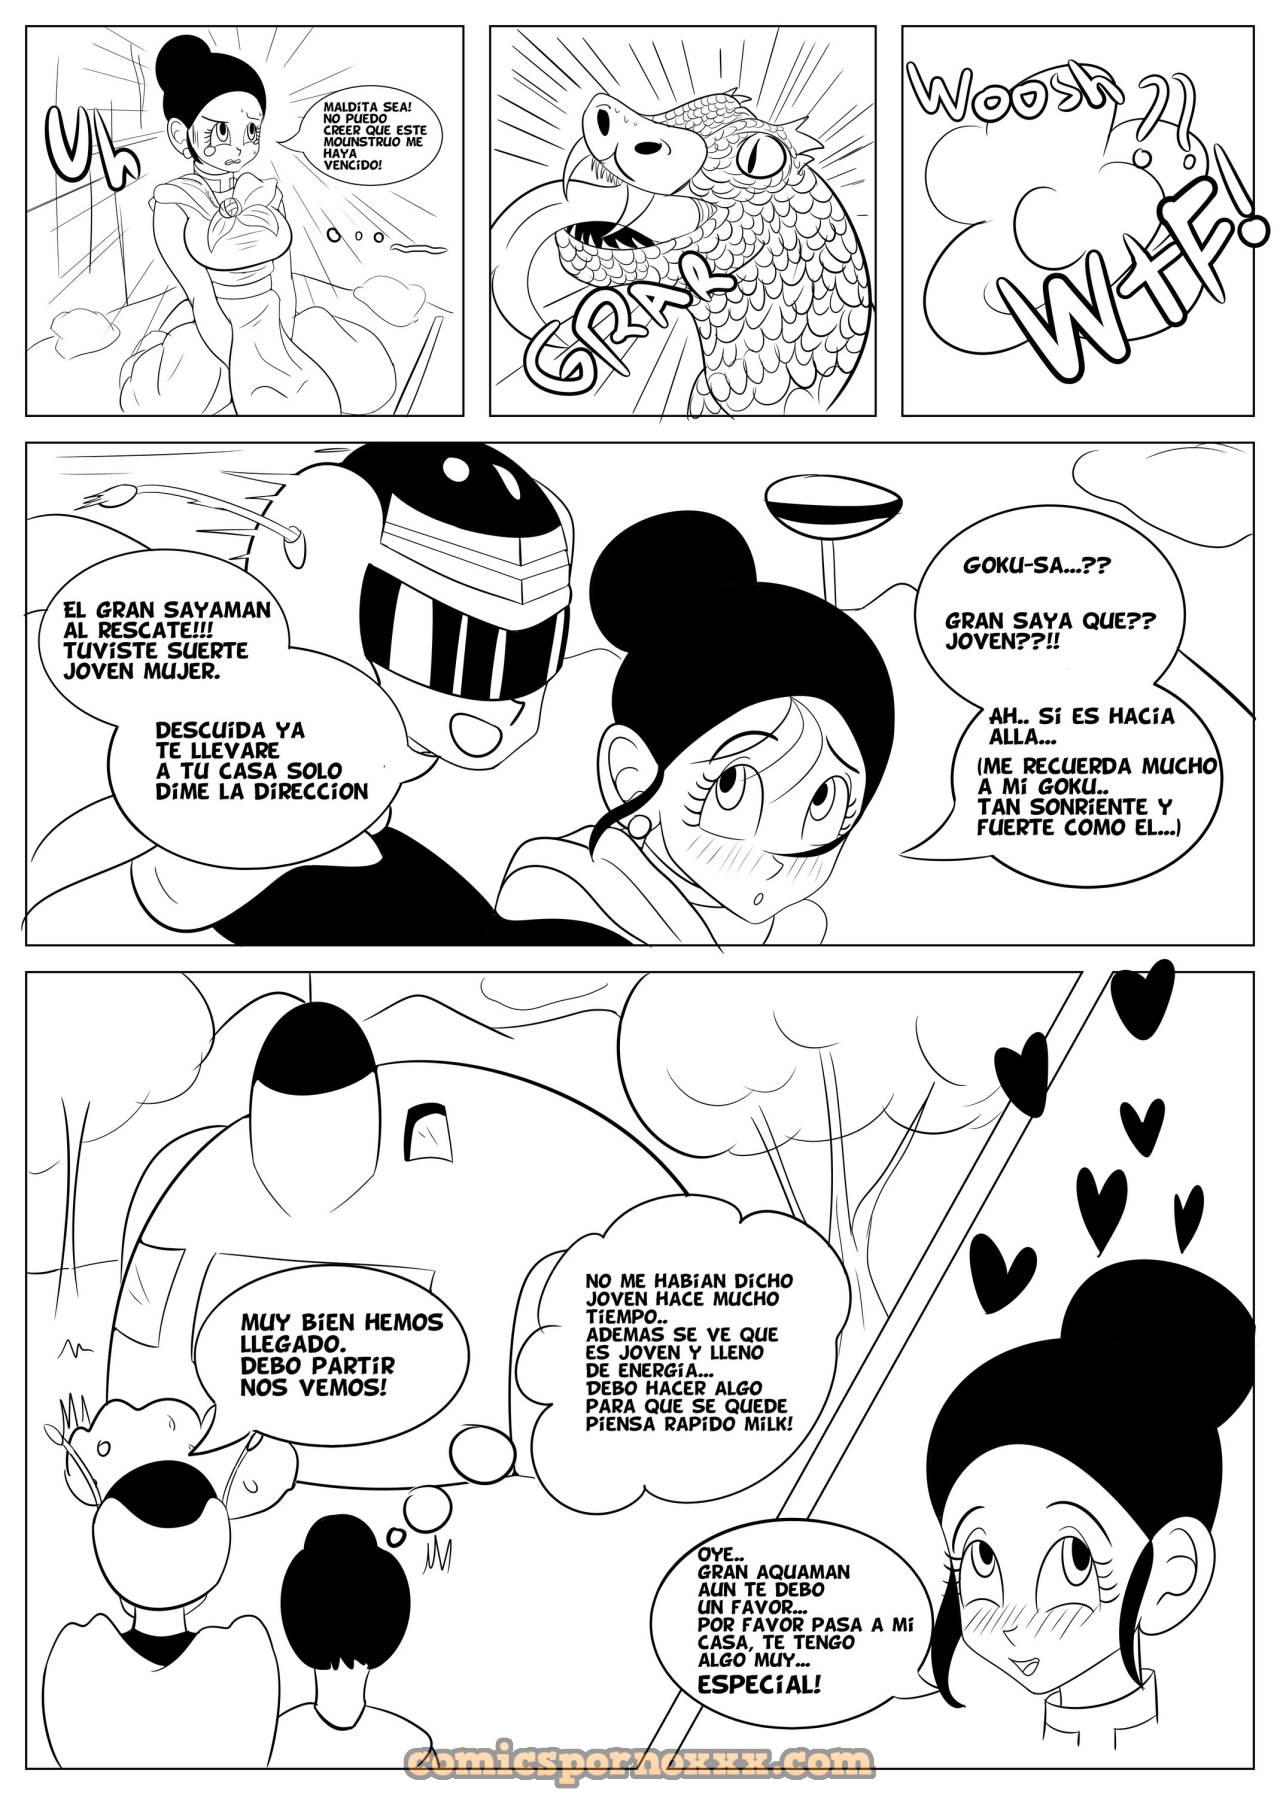 Malentendidos Familiares - 4 - Comics Porno - Hentai Manga - Cartoon XXX